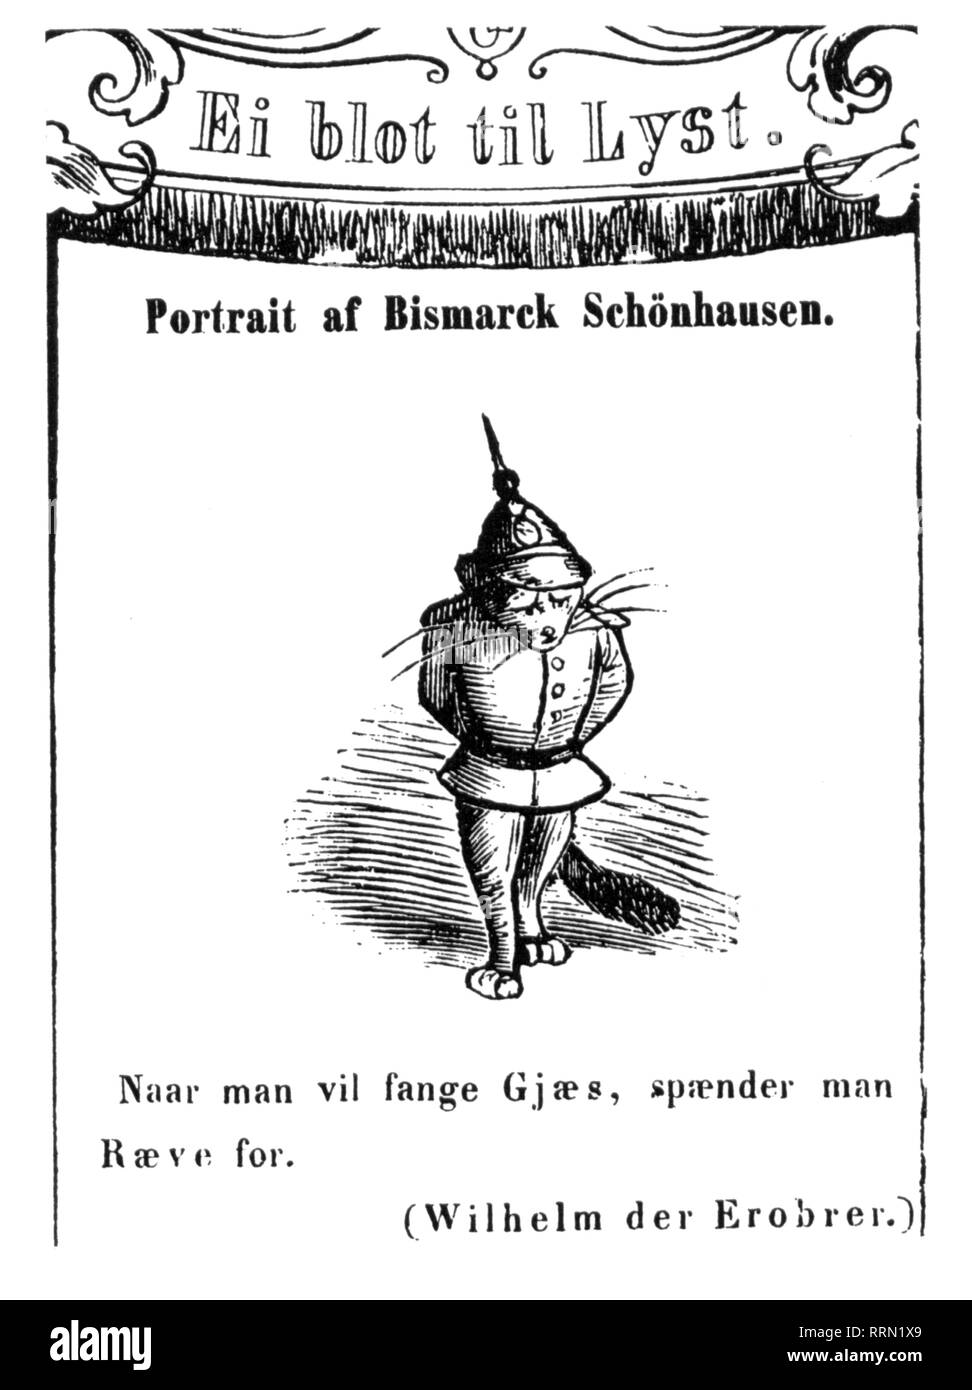 Bismarck, Otto von, 1.4.1815 - 30.7.1898, German politician, caricature, 'Portrait of Bismarck Schoenhausen', drawing, Copenhagen, 28.2.1863, Additional-Rights-Clearance-Info-Not-Available Stock Photo